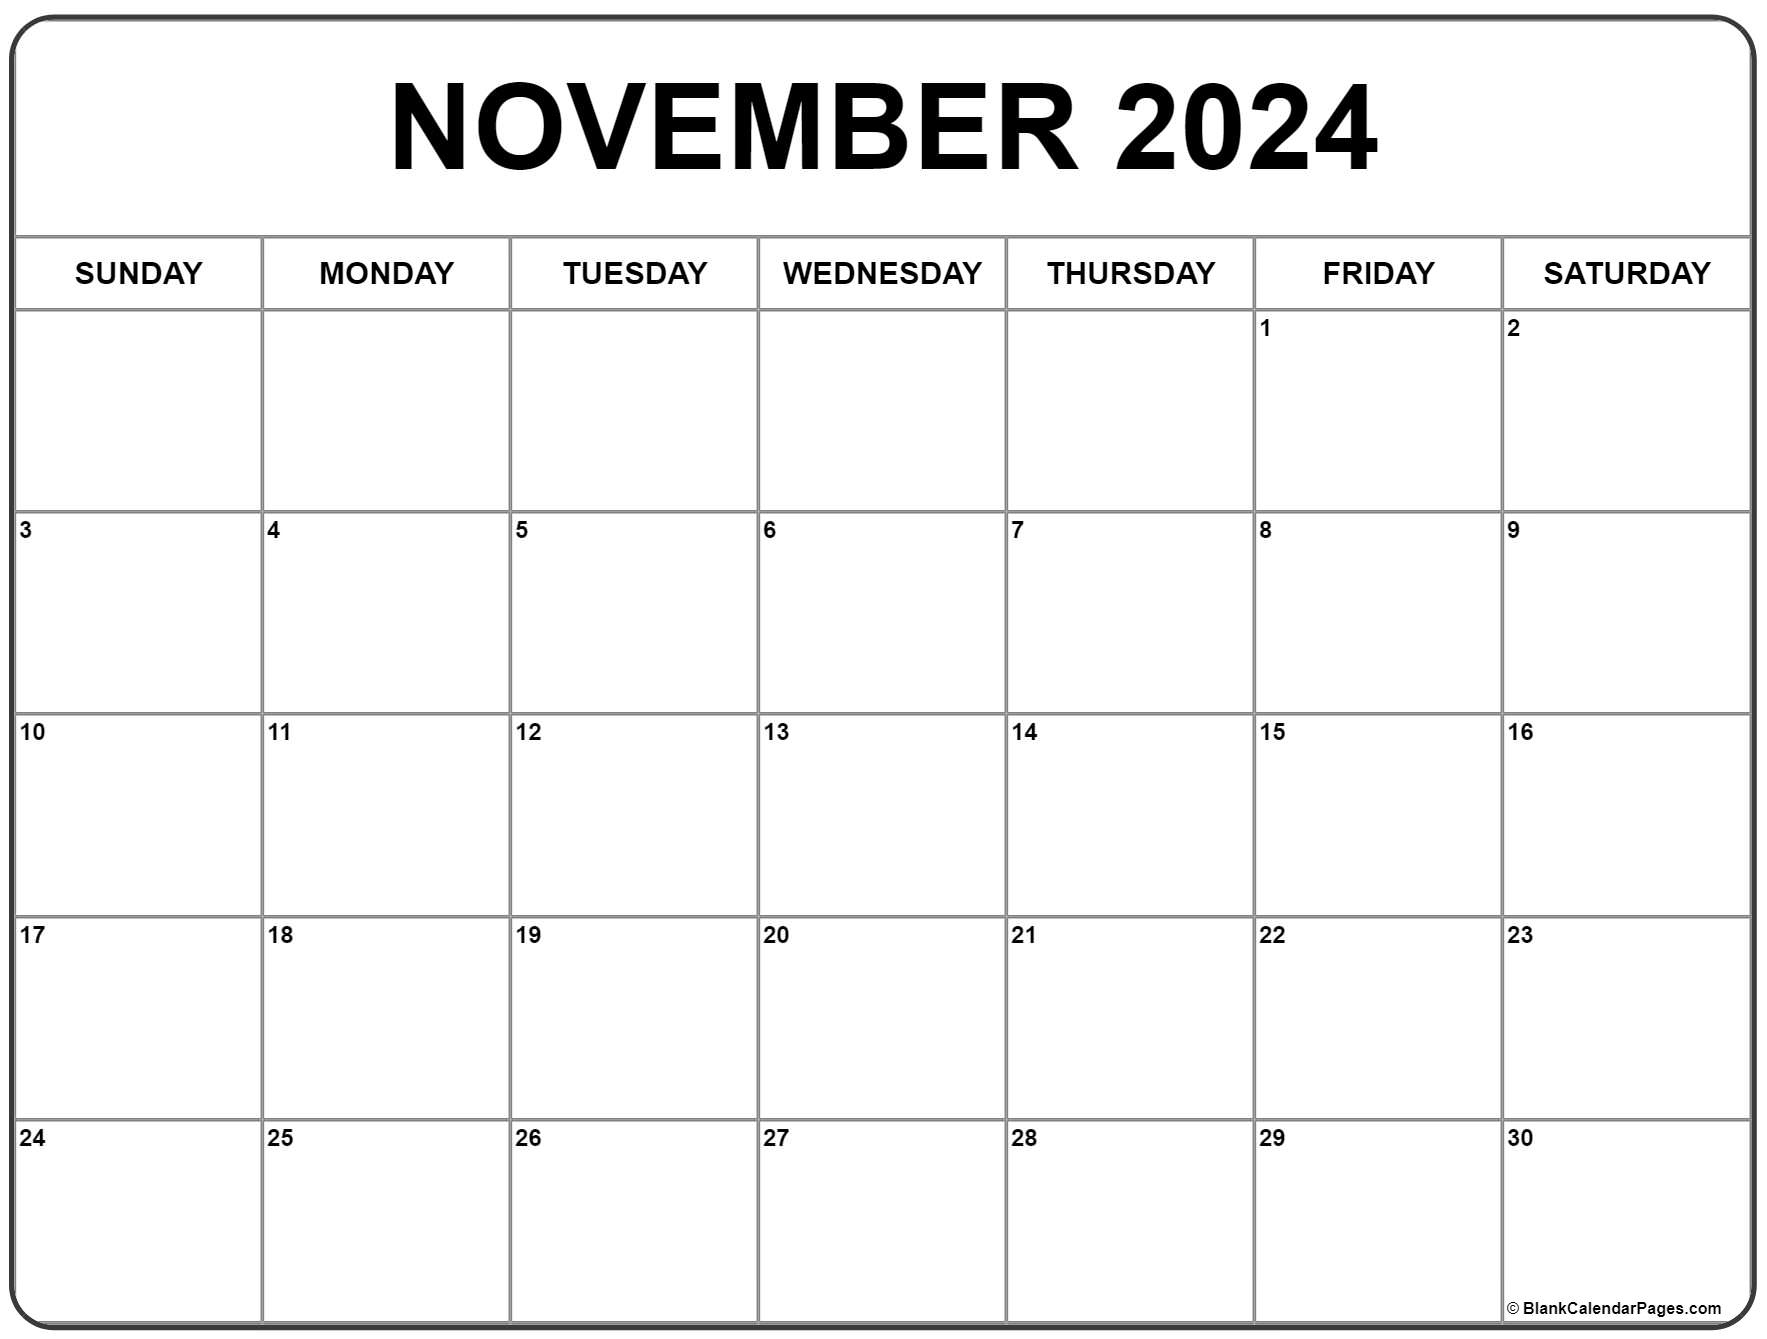 November 2024 Calendar Free Printable Calendar | Free Printable 2024 November Calendar